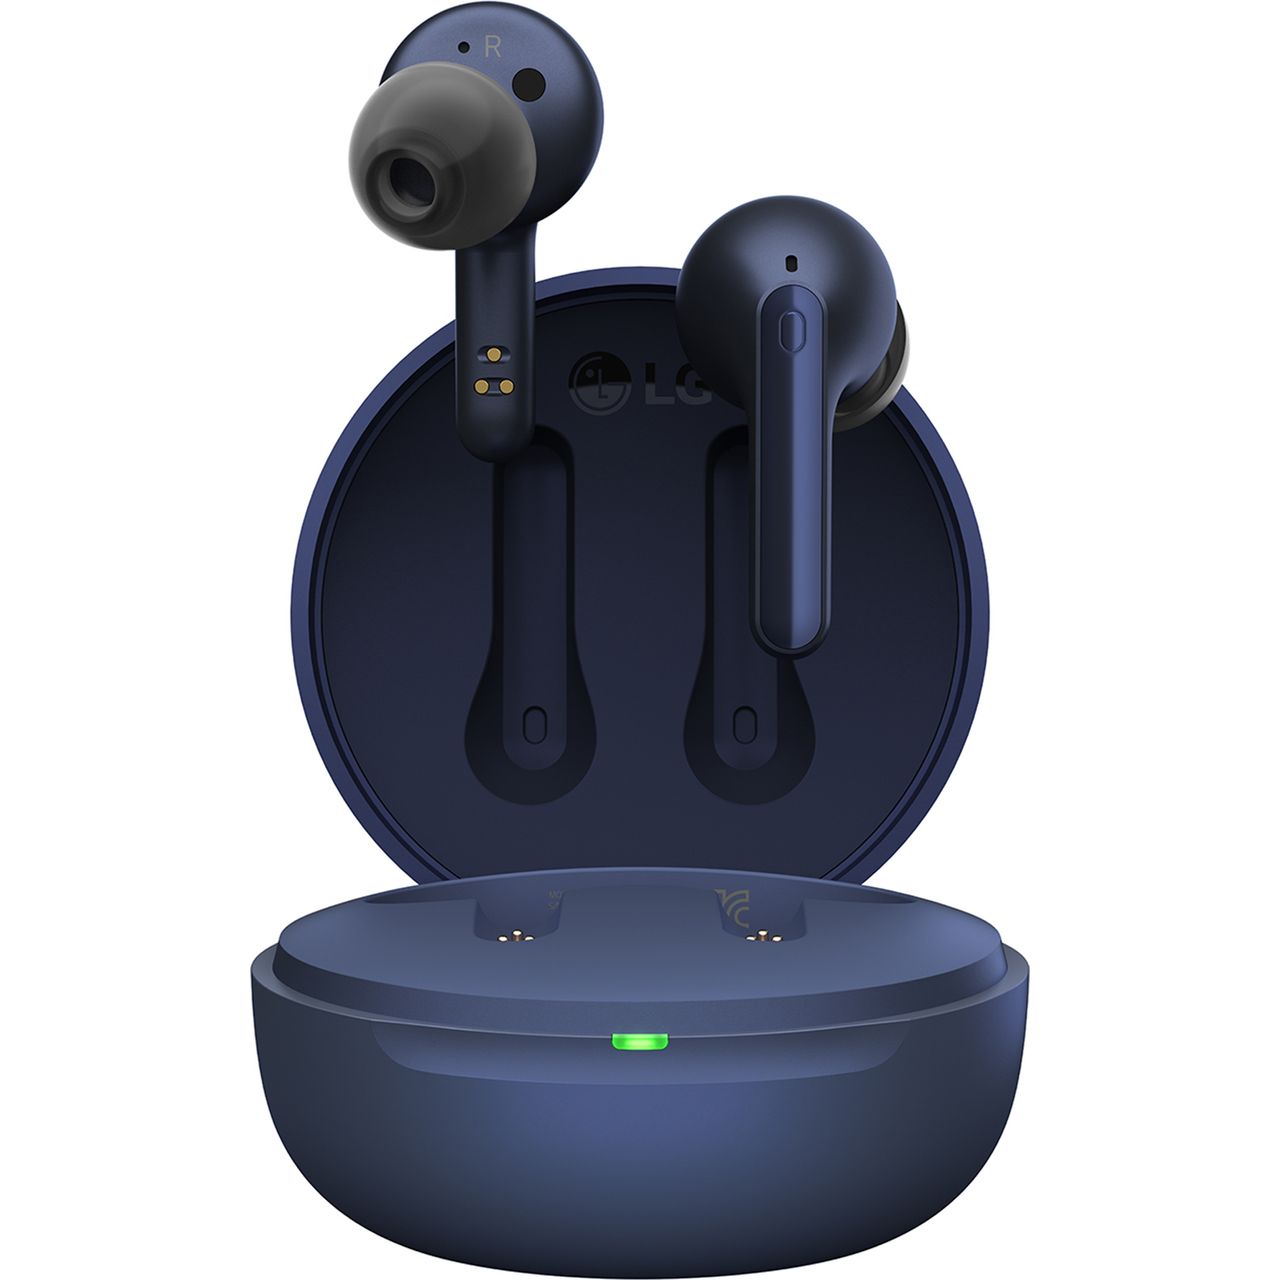 LG Tone Free UFP3 Wireless Bluetooth Earbuds - Navy Blue - Refurbished Pristine